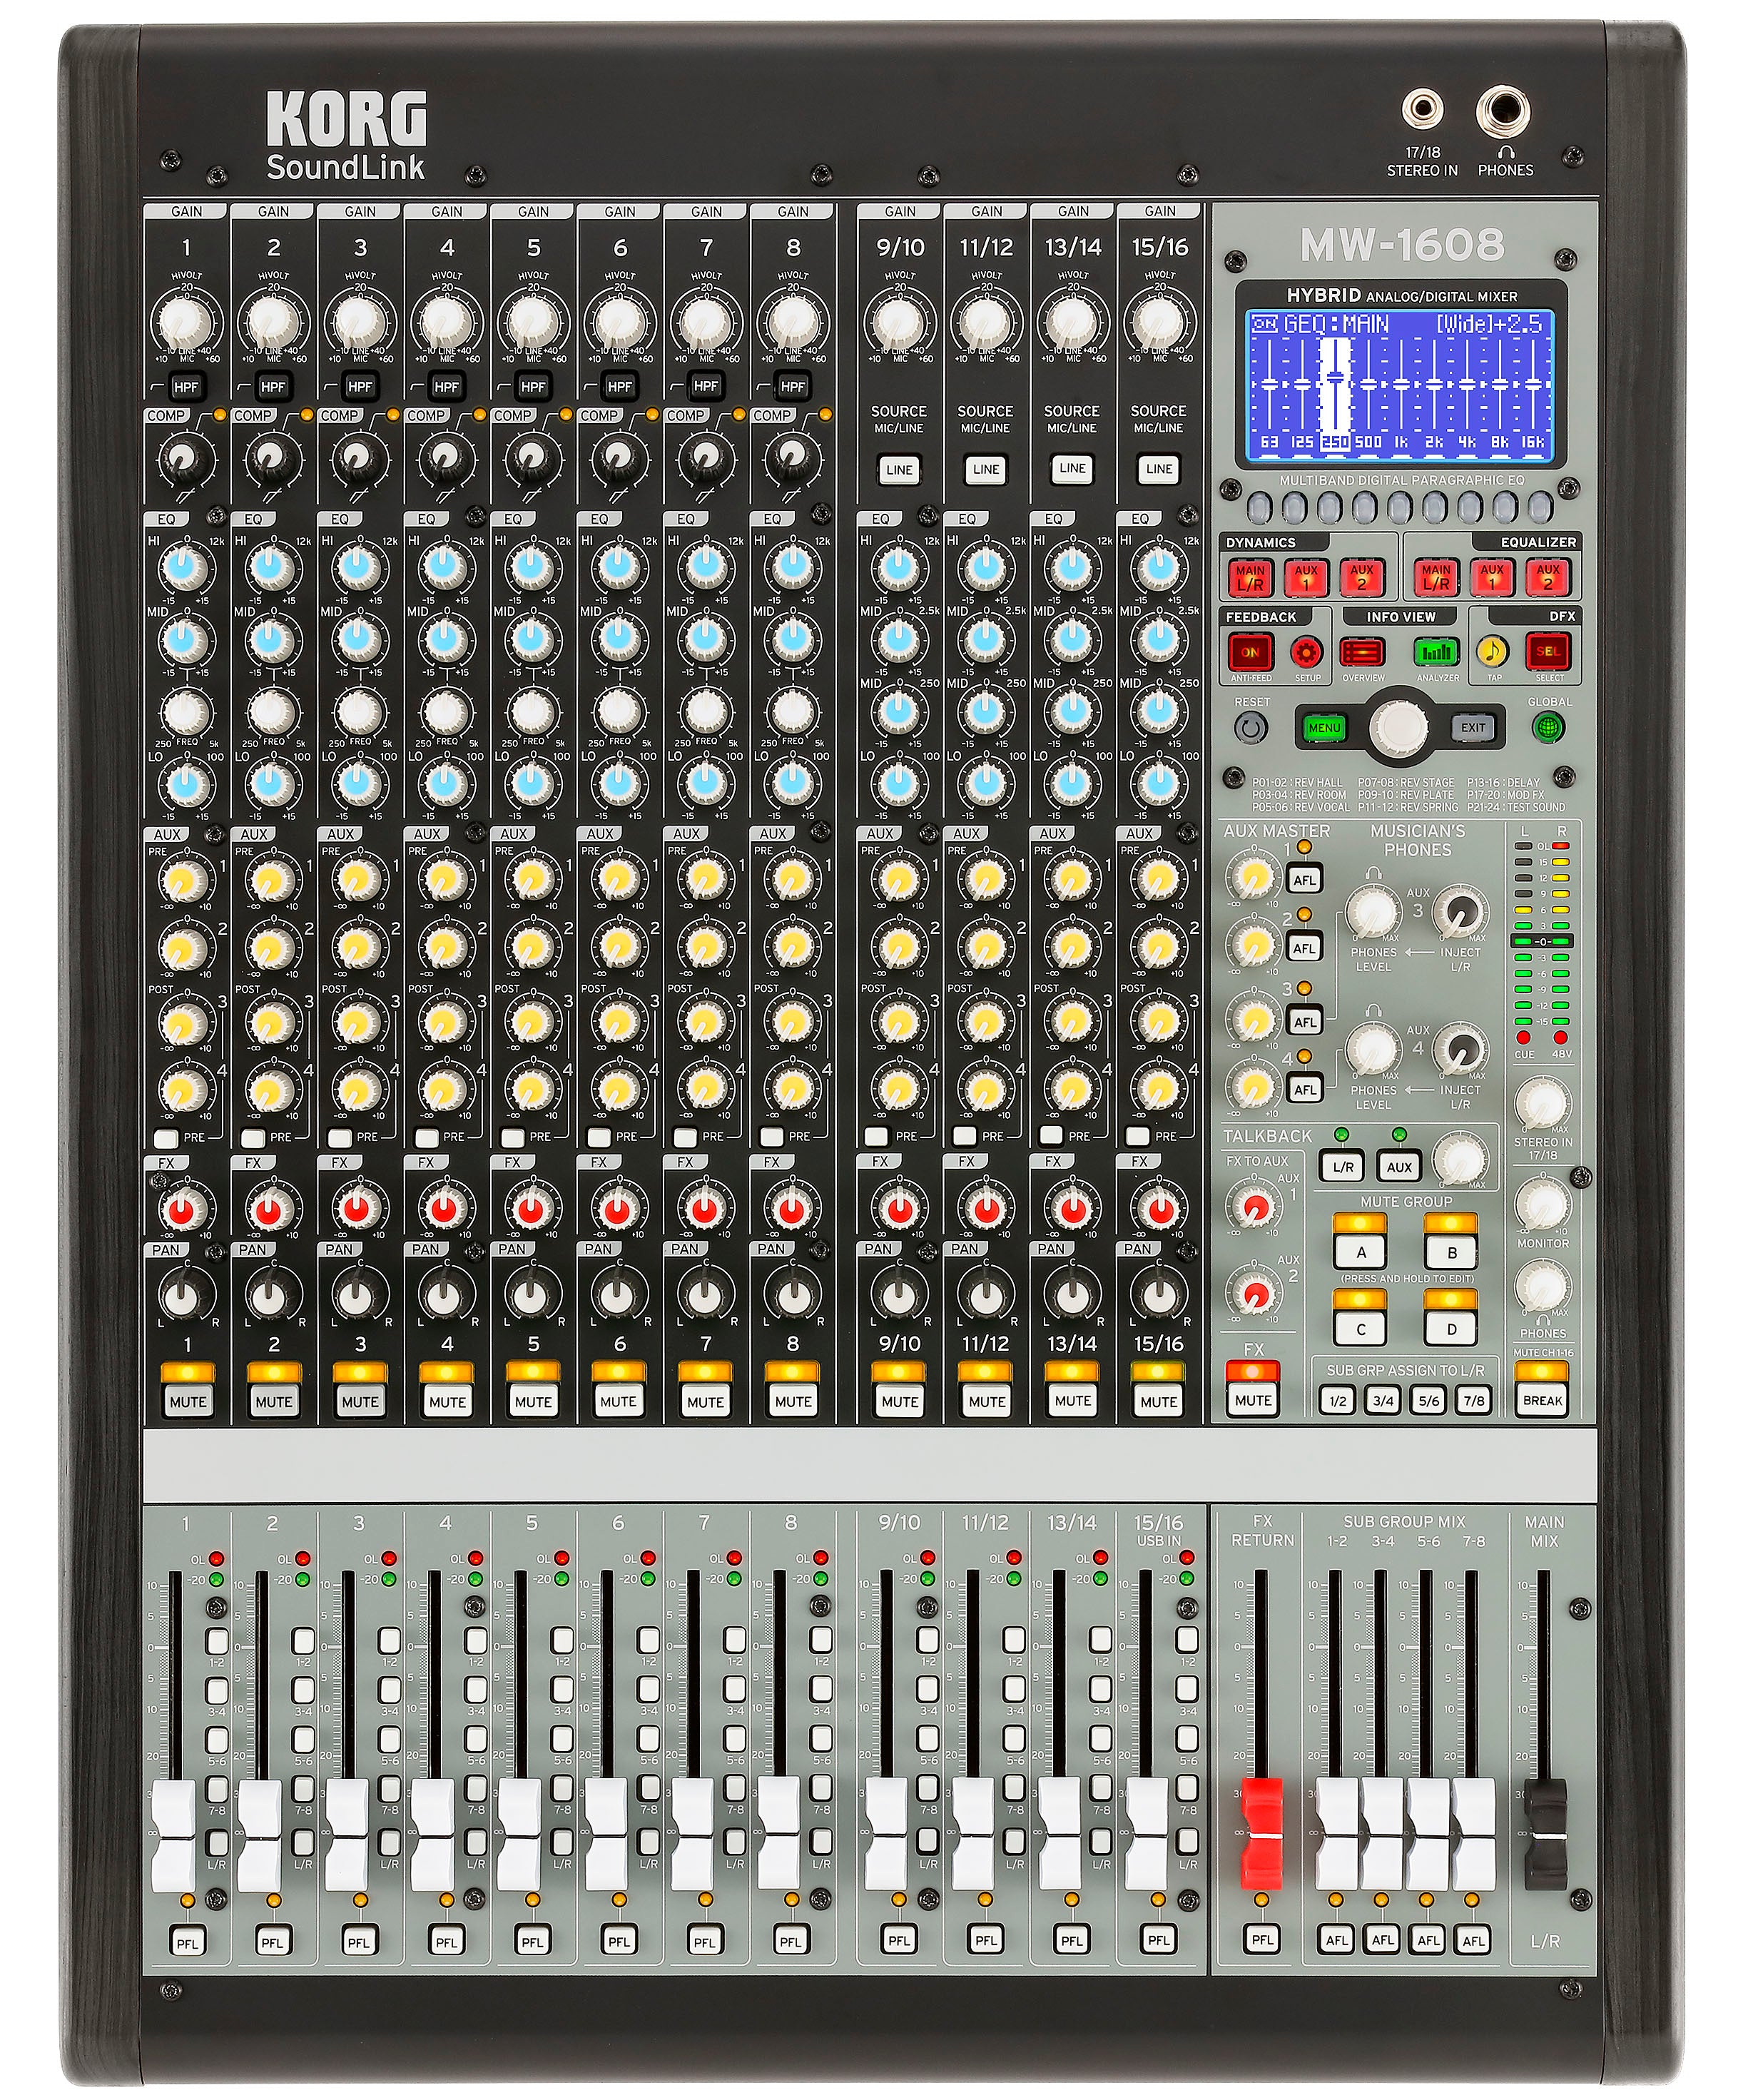 SoundLink MW-1608BK 16-channel Hybrid Mixer - Black KORG USA Official Store